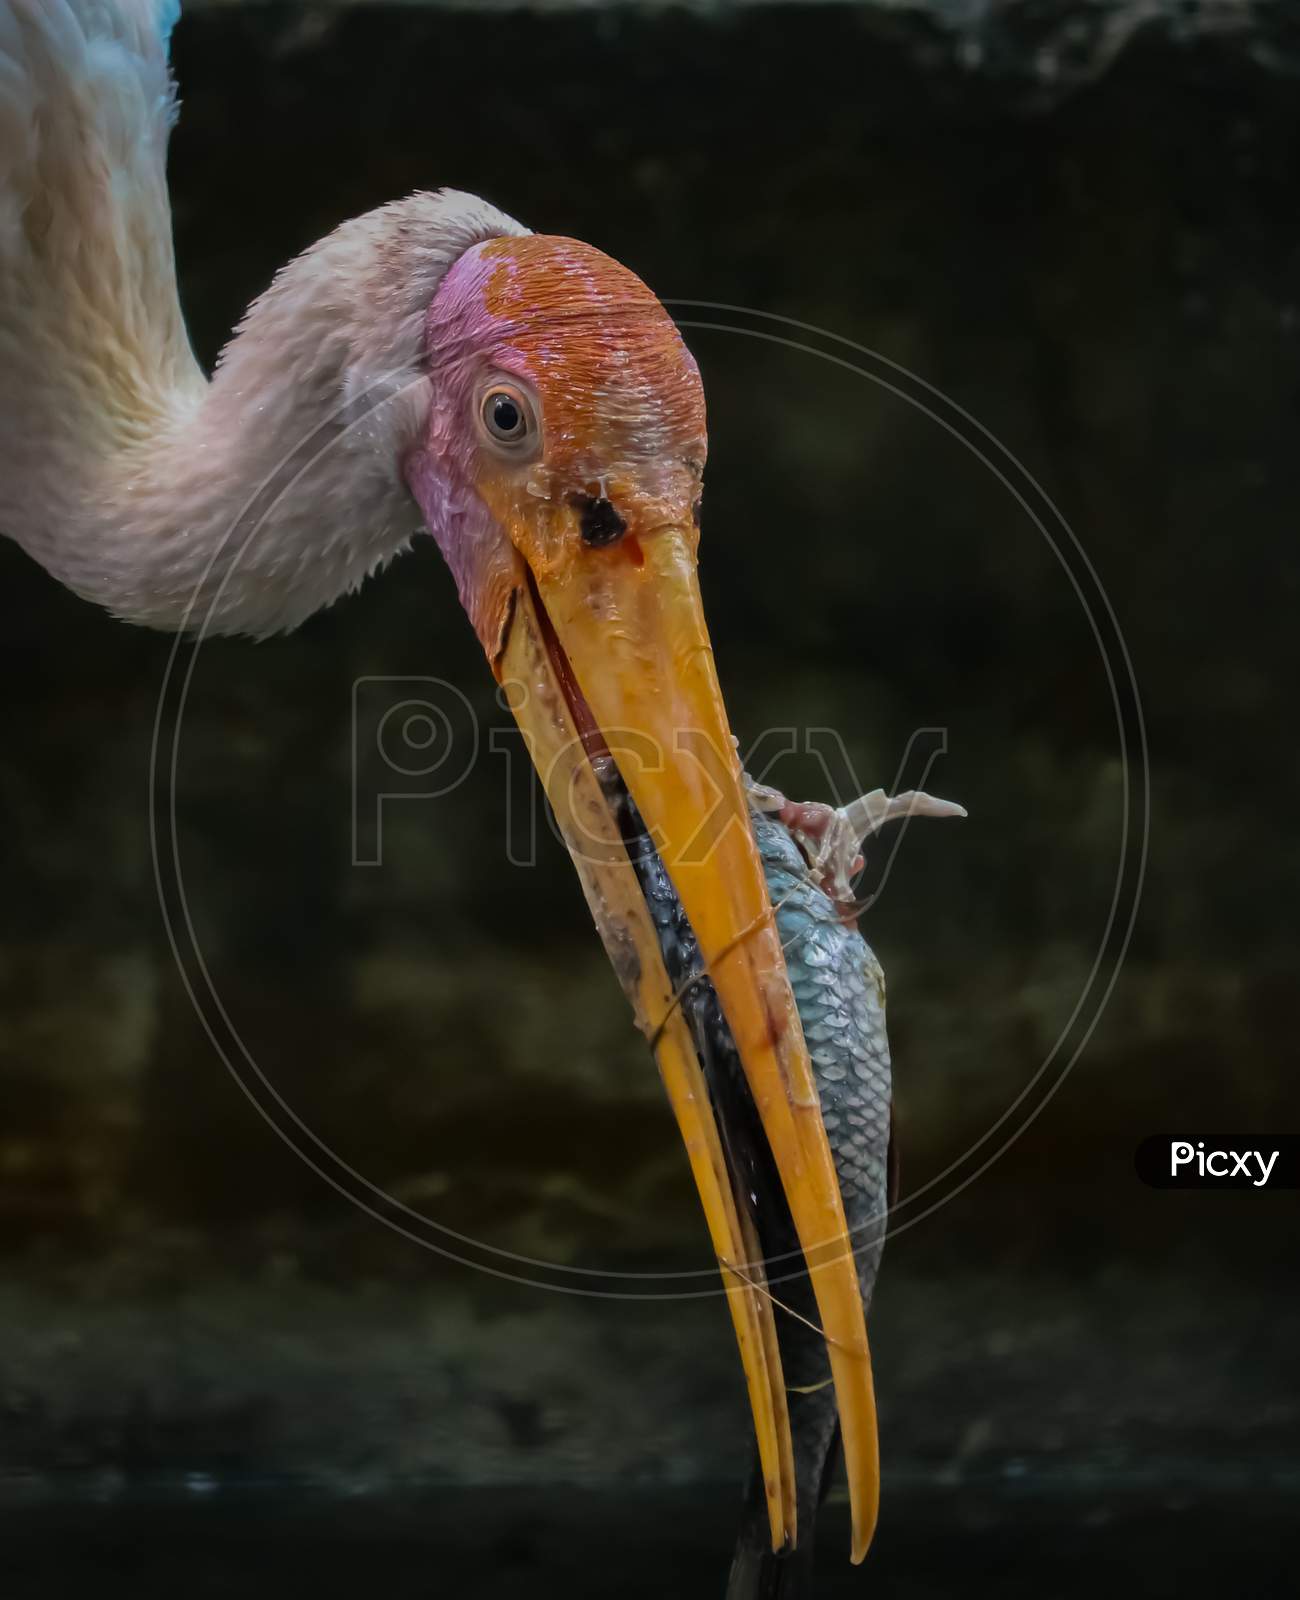 Painted stork hunting fish, Painted Stork with big fish in beak.